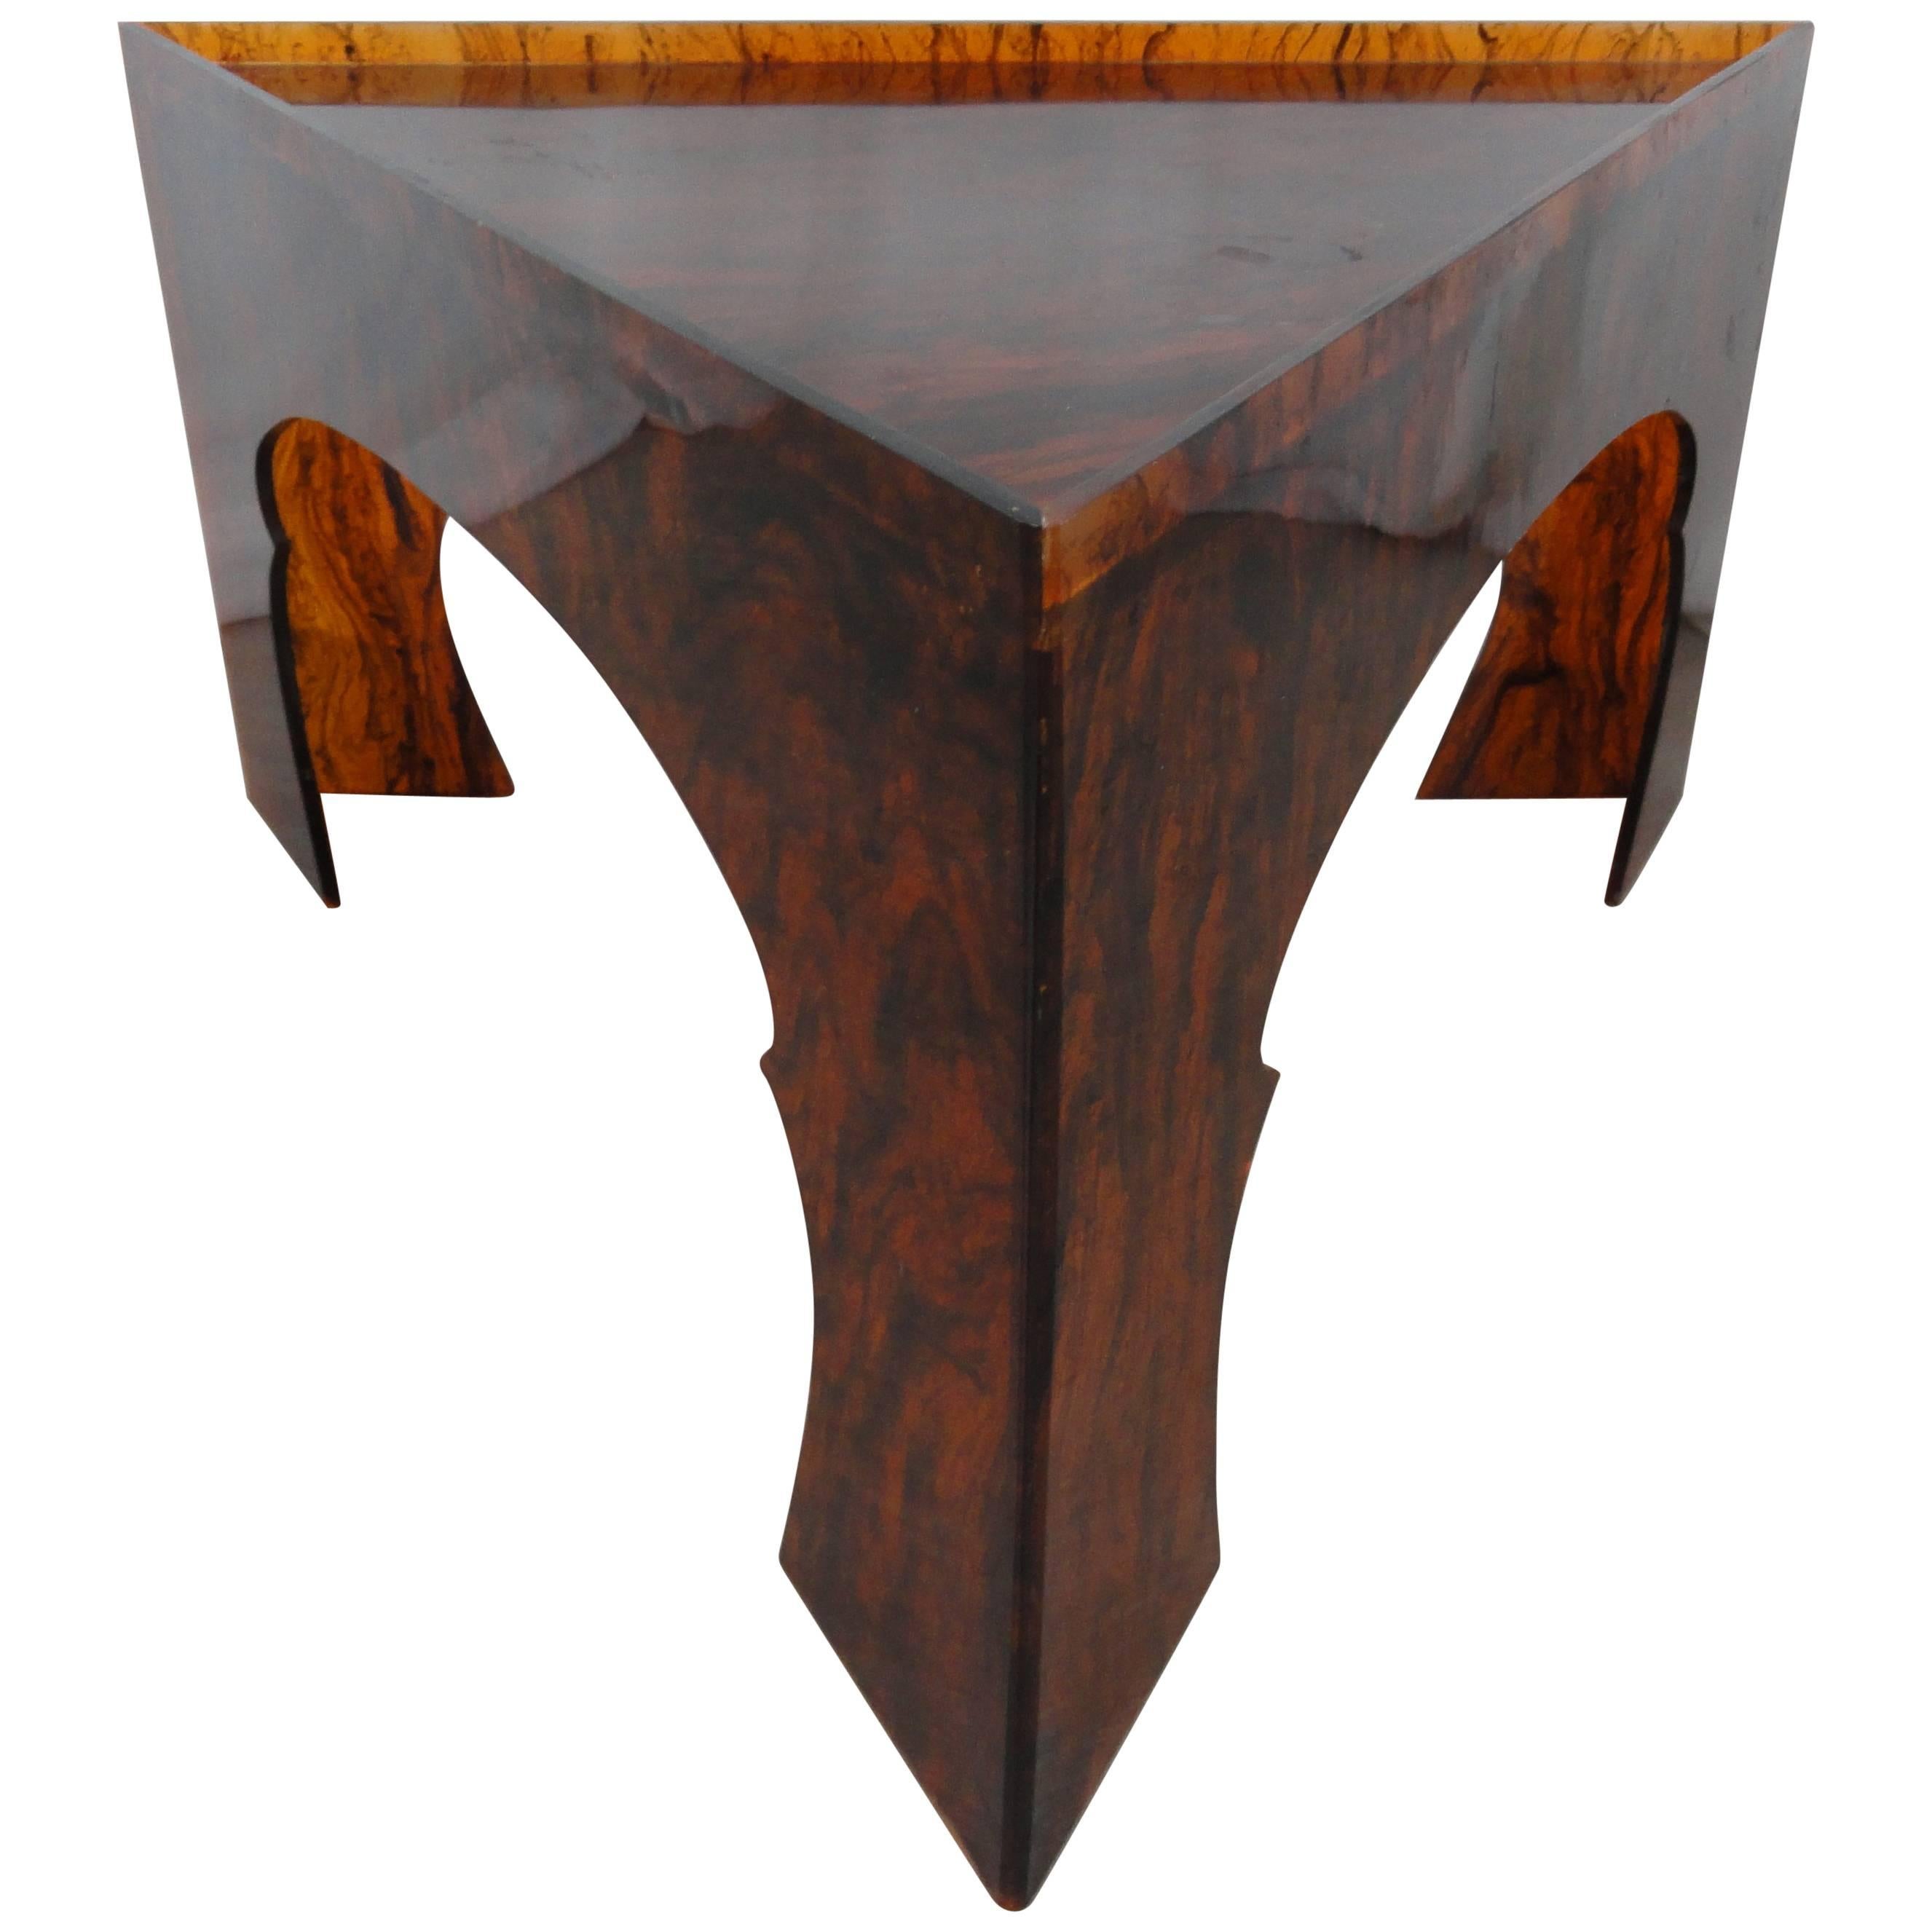 Faux Tortoiseshell Acrylic Triangle Table, Short For Sale